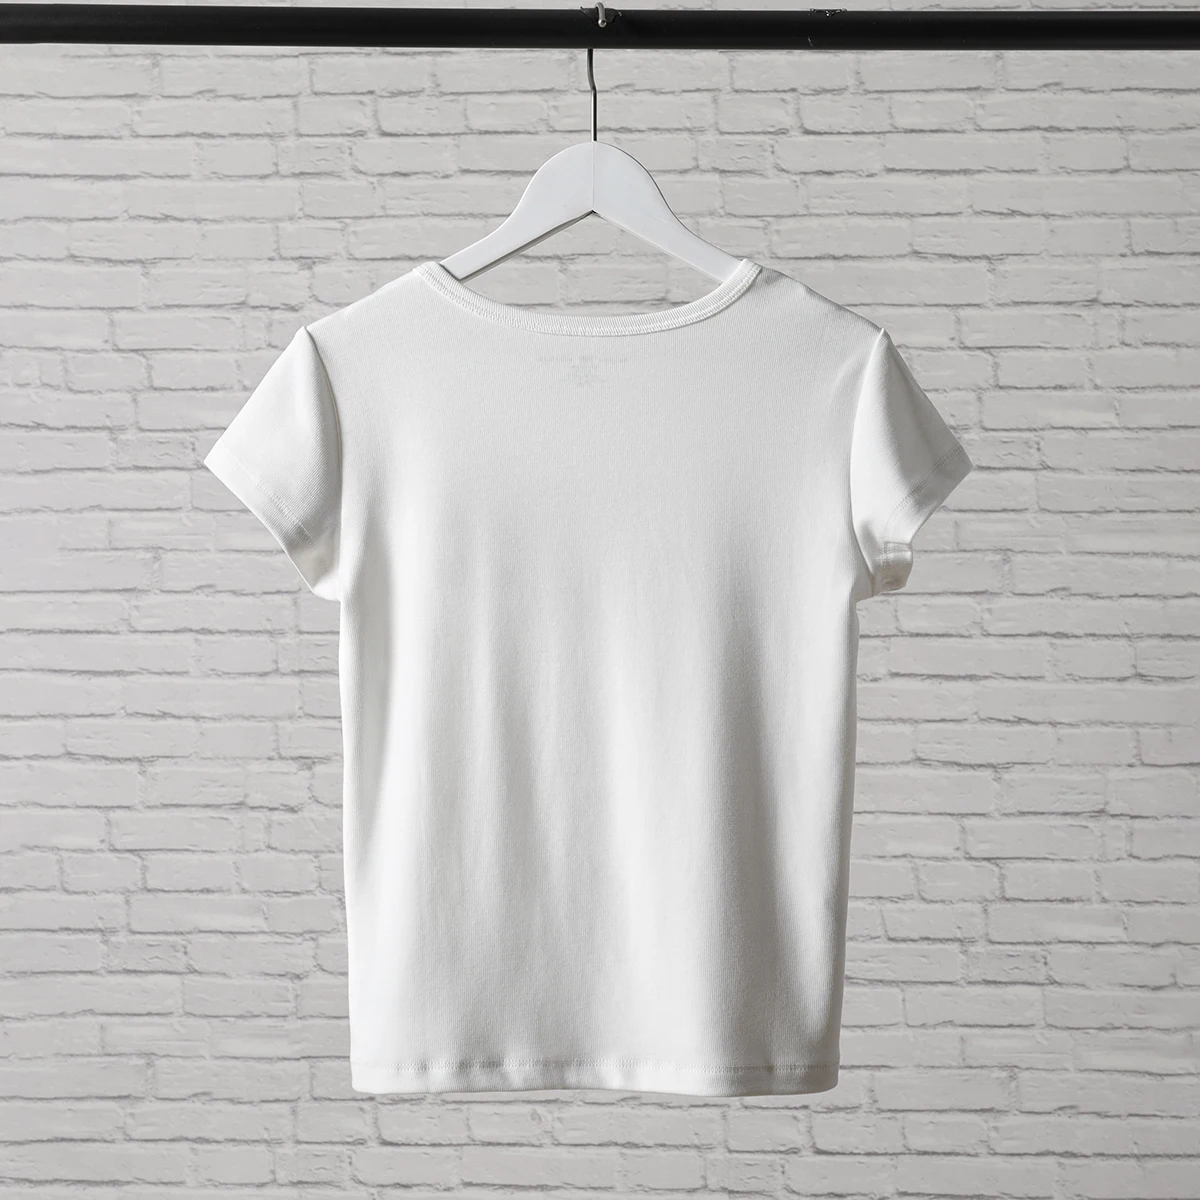 Chic Heart Graphic Tee Shirt Women Summer Round Neck Short Sleeve Cotton Soft Tshirt Tops Vintage Women Streetwear T Shirt 2021